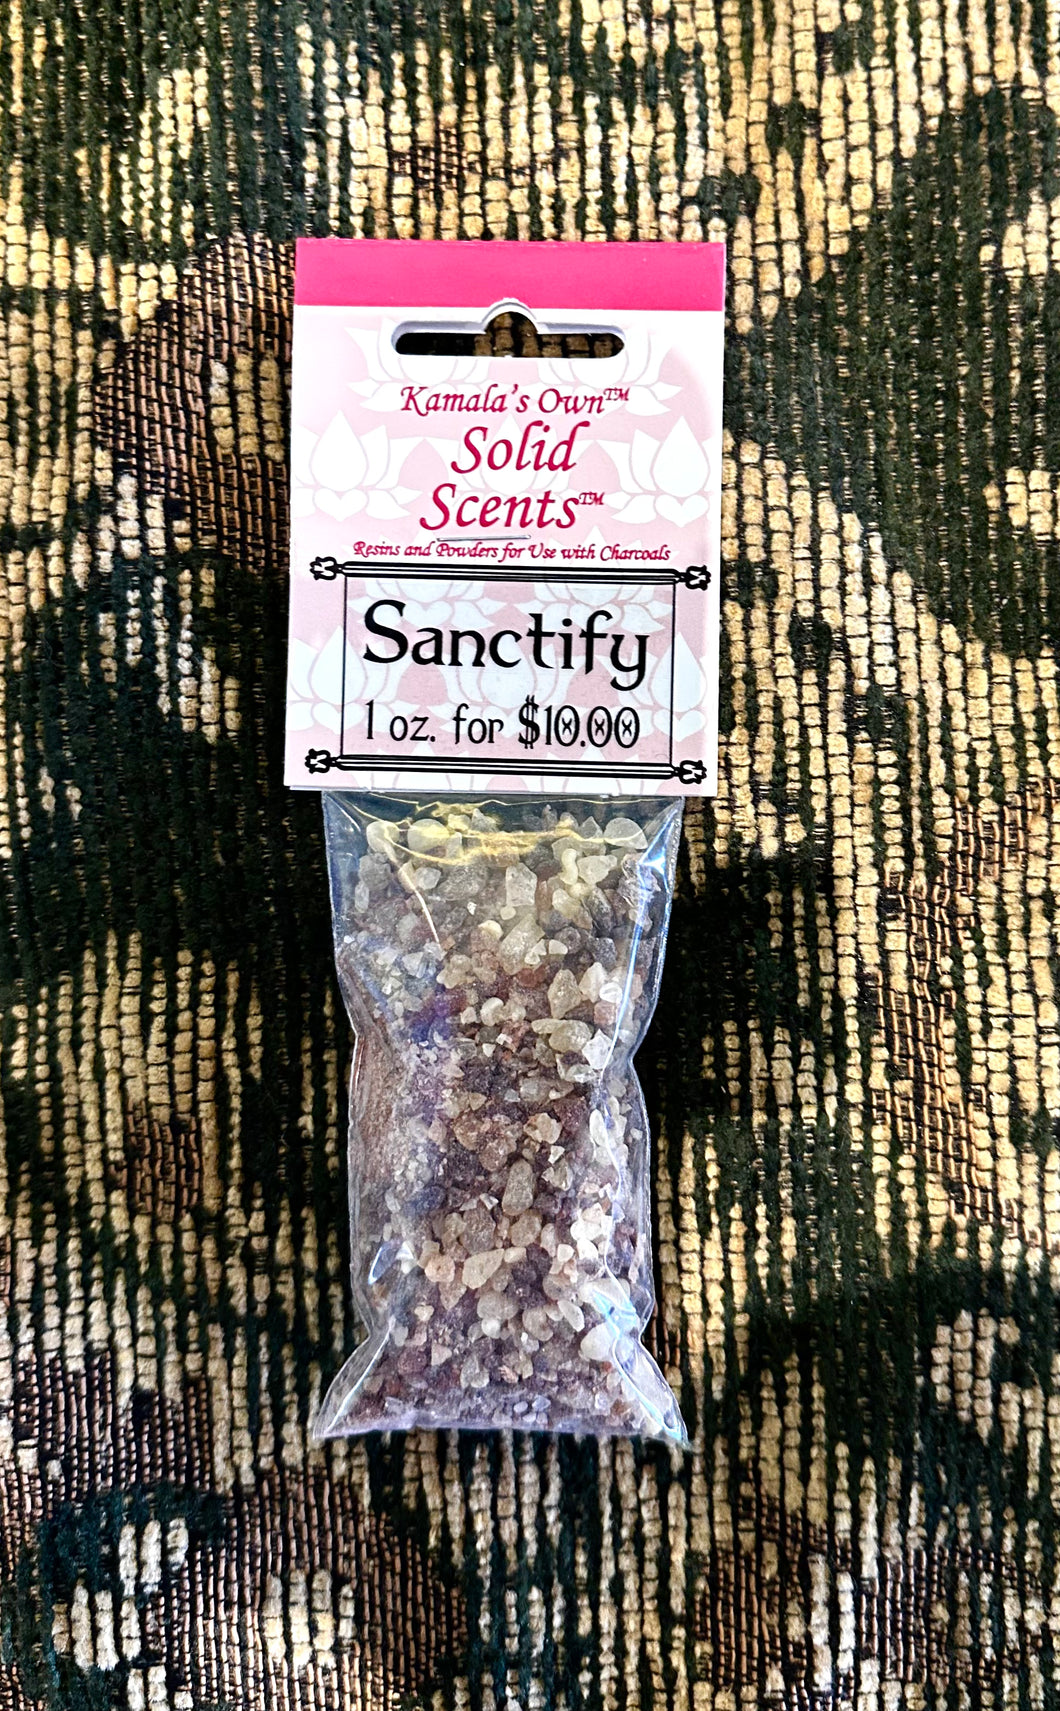 Sanctify resin incense